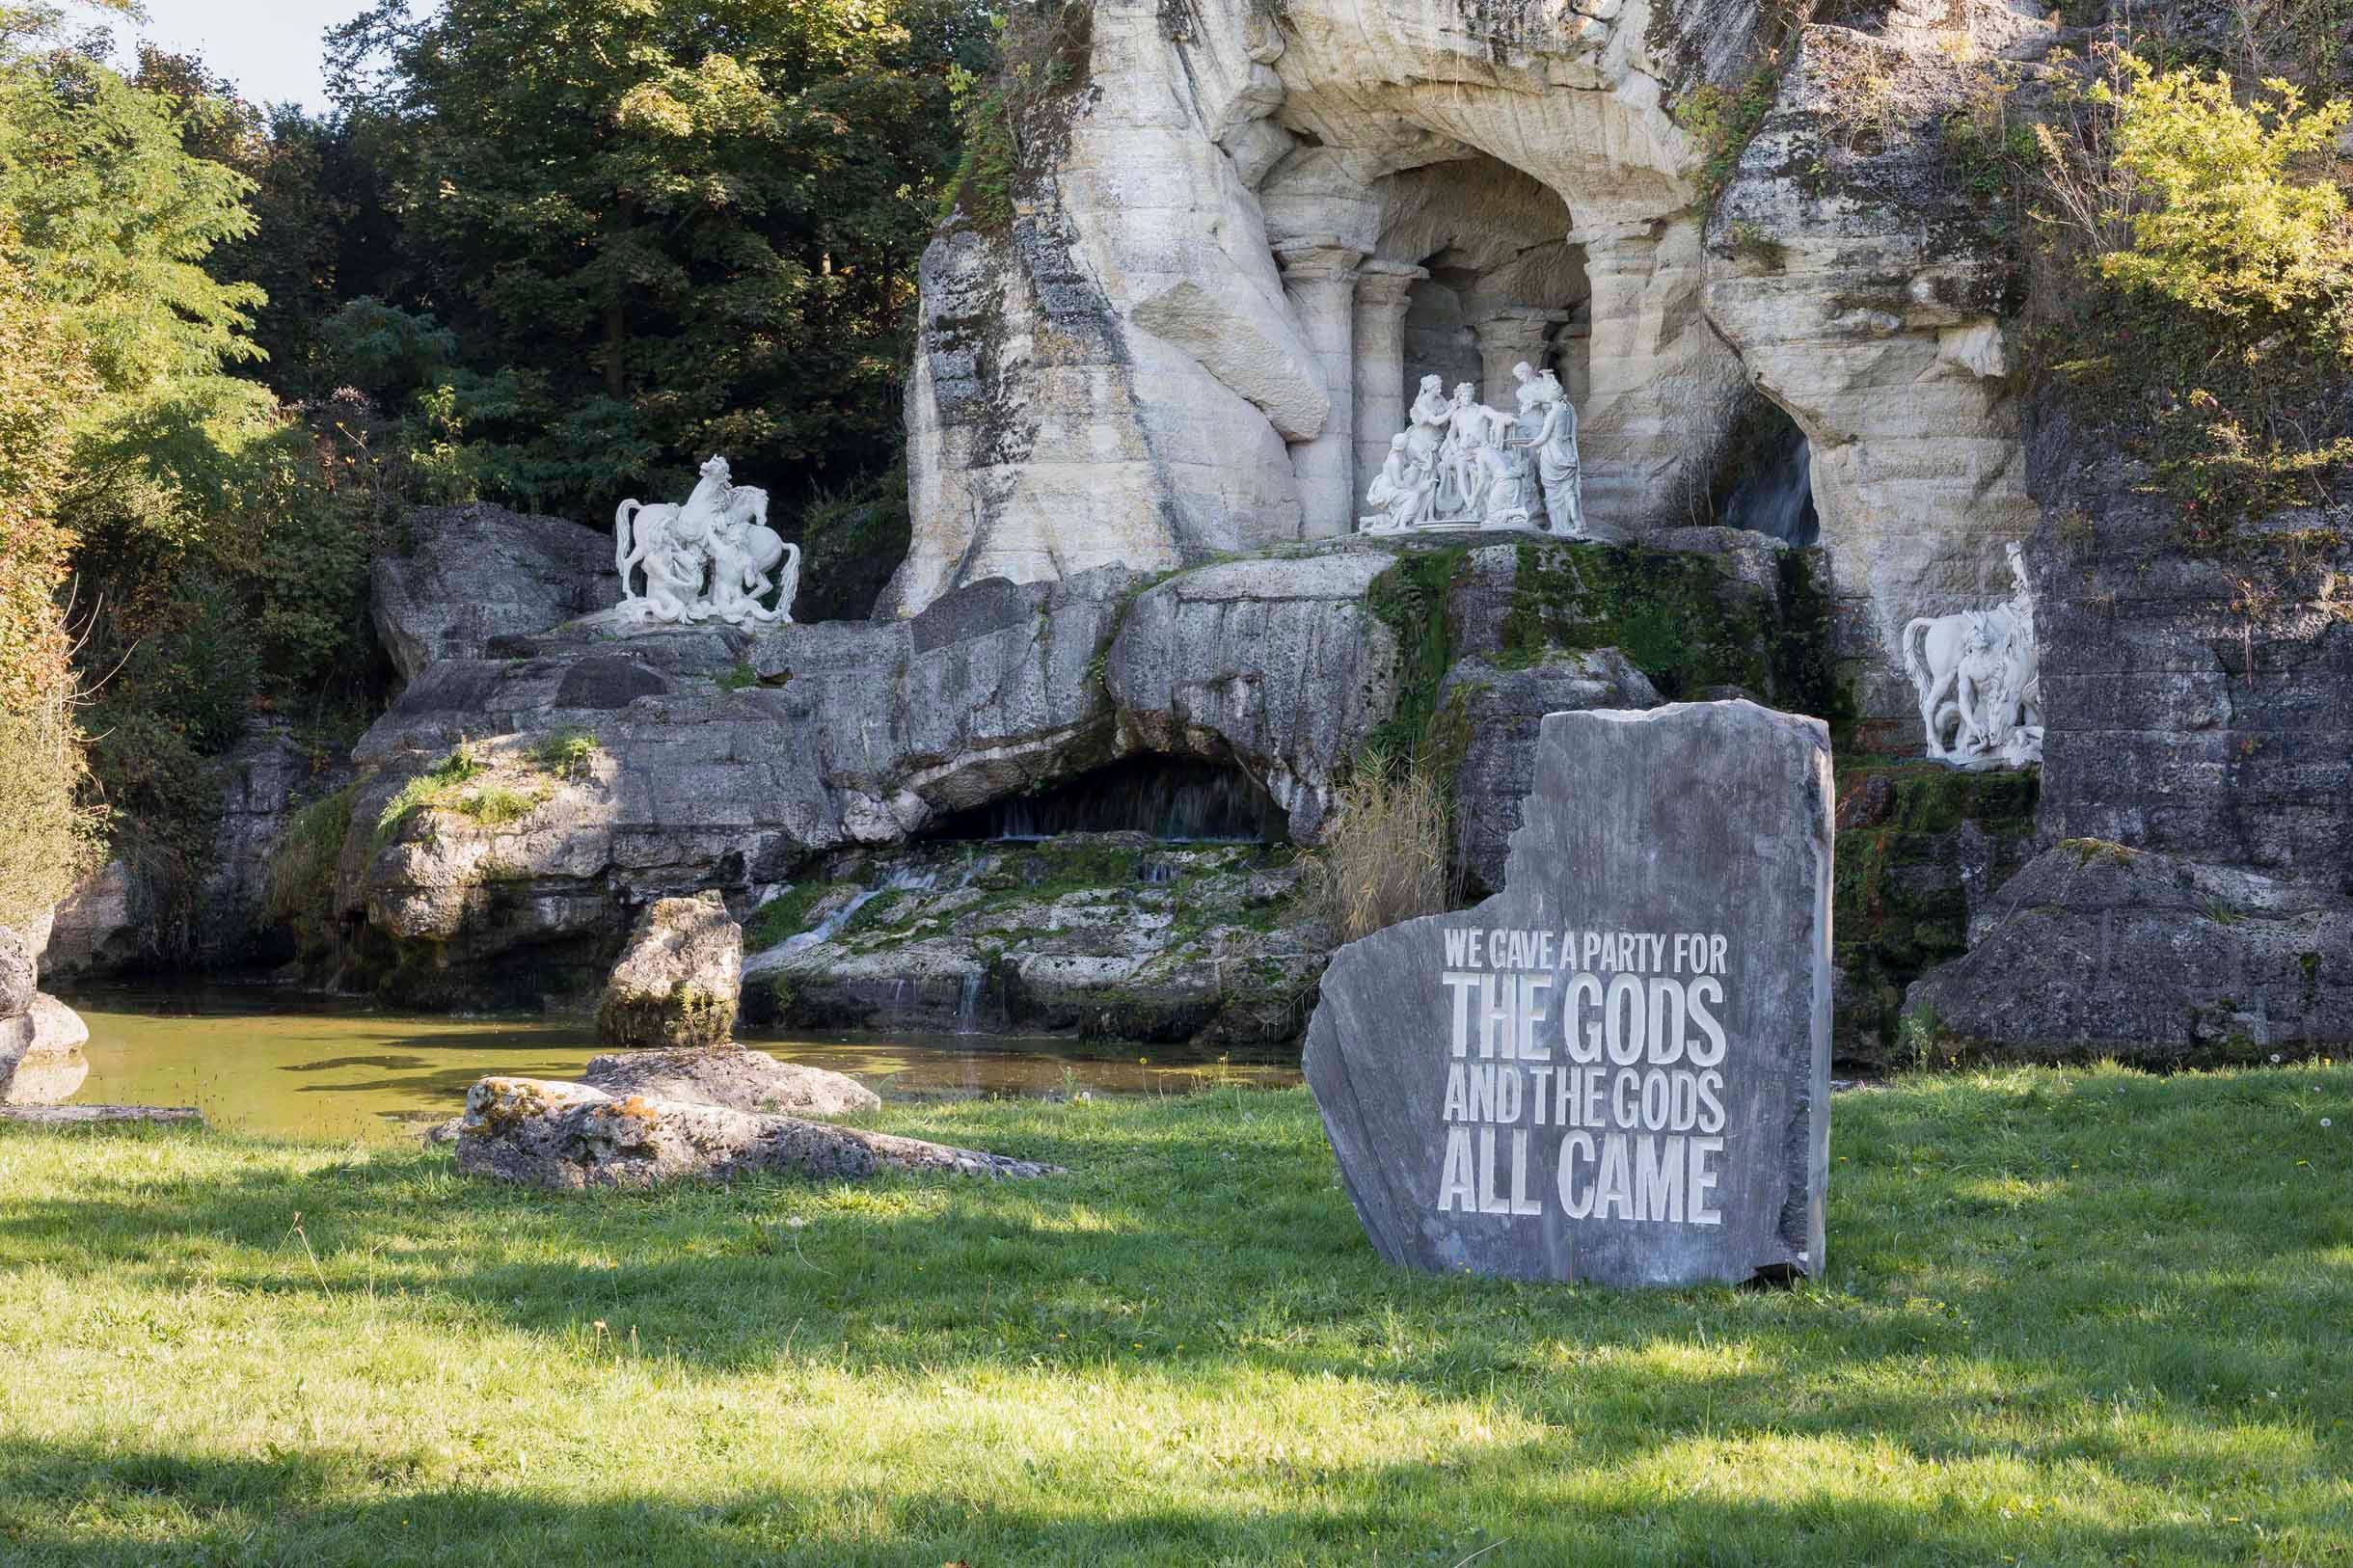 Contemporary art invades the gardens at the Château de Versailles